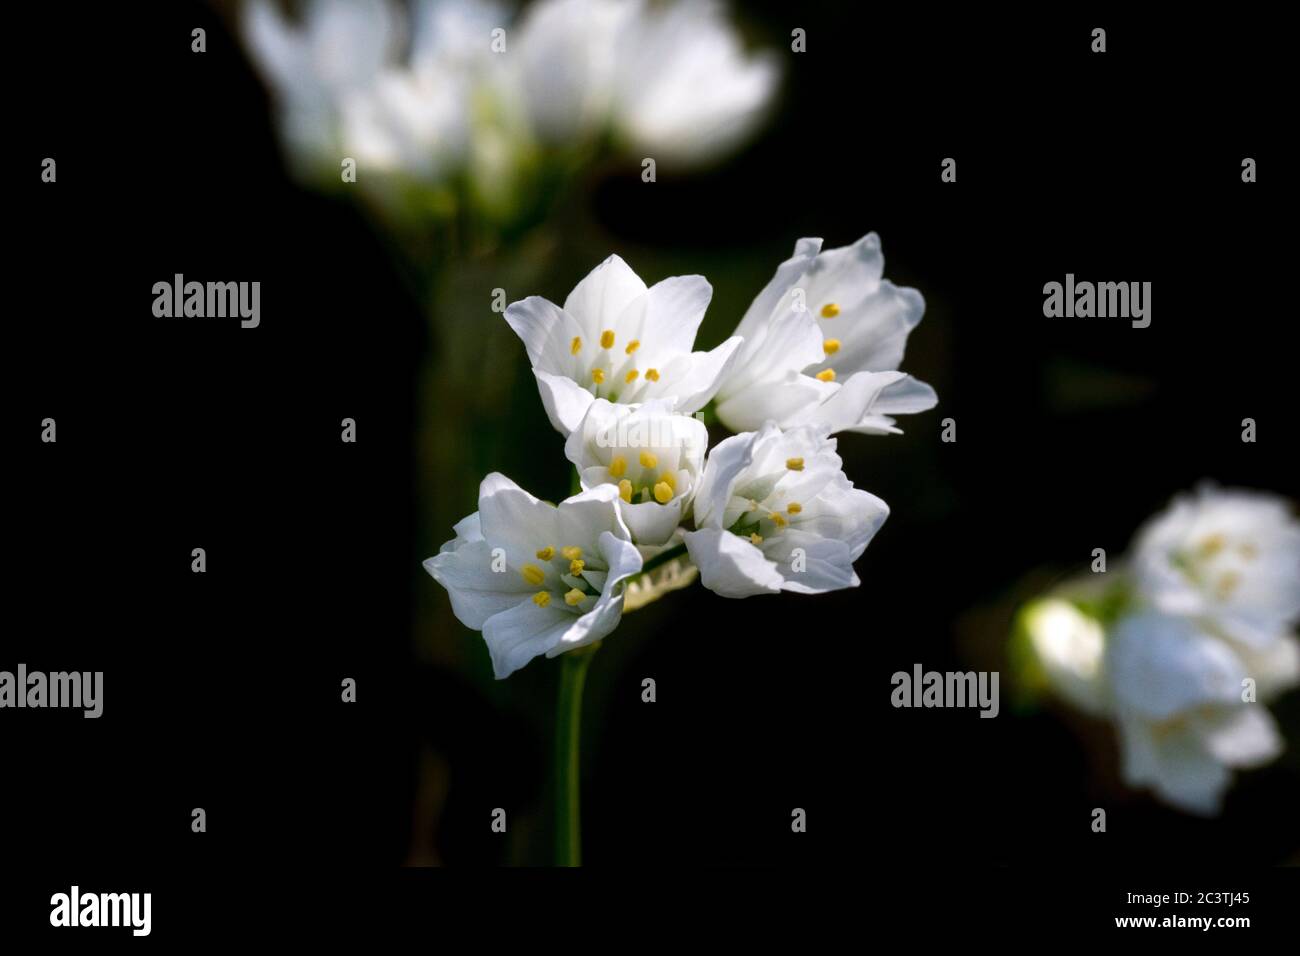 Lebanon Onion, Allium zebdanense (Allium zebdanense), inflorescence against black background, Netherlands Stock Photo